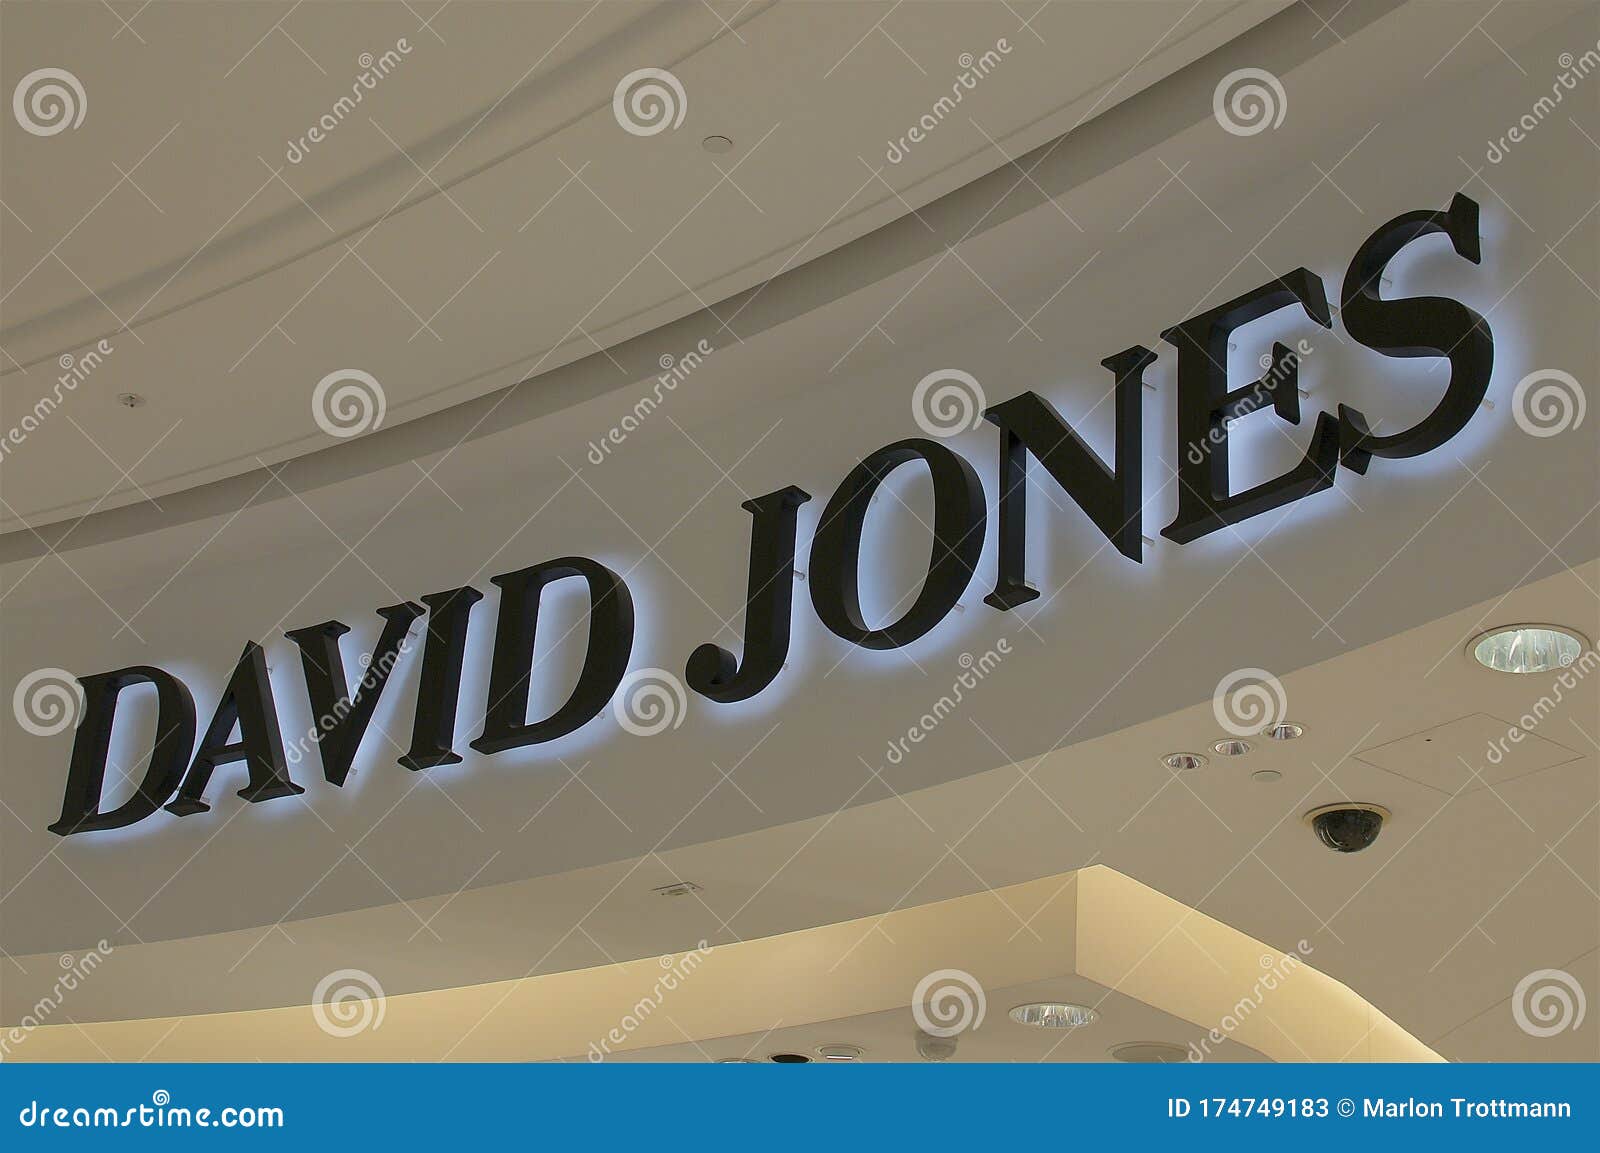 David Jones Logo Hanging in Brisbane Editorial Stock Photo - Image